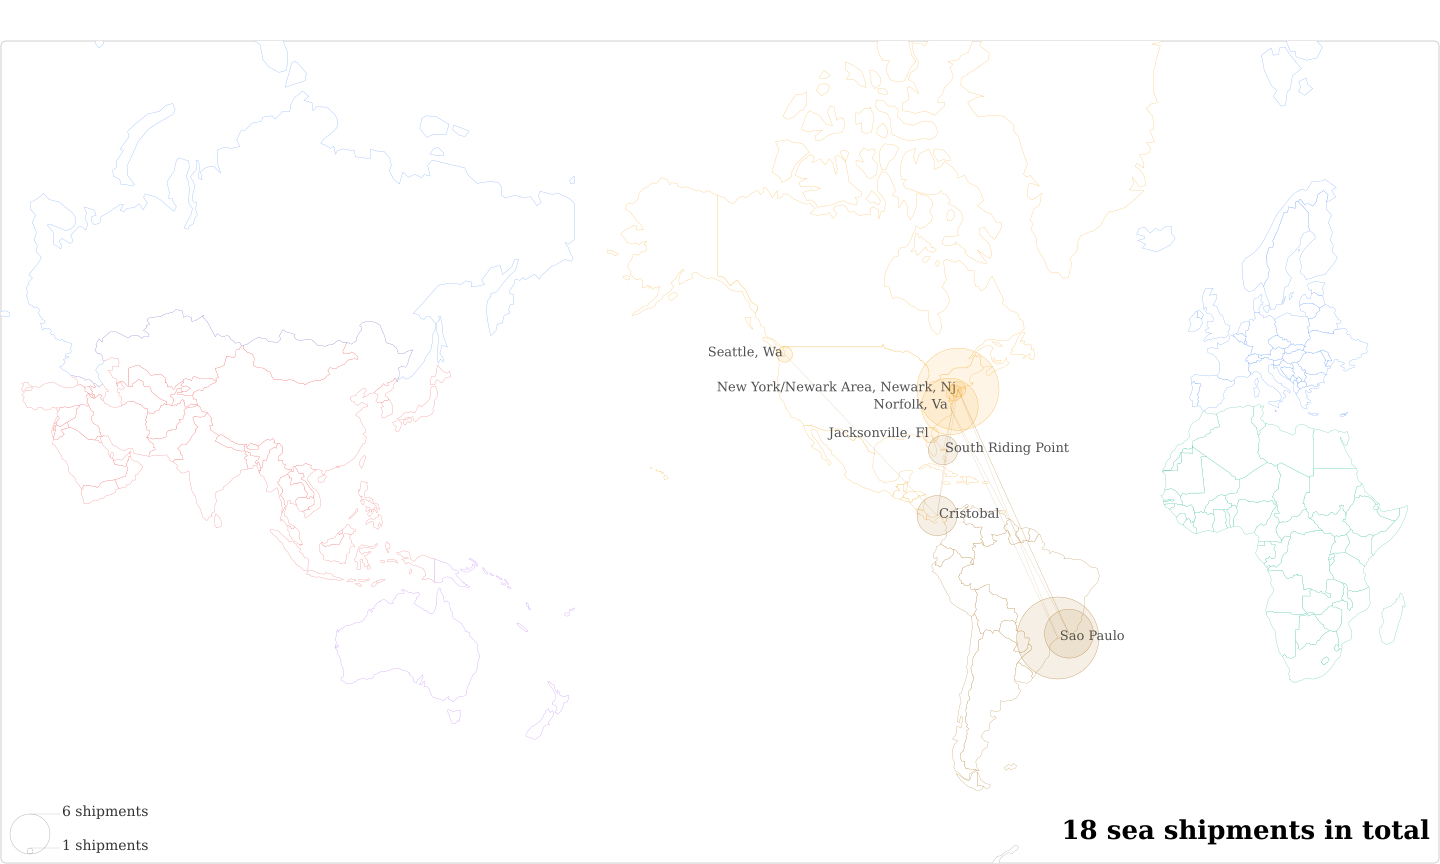 Nicchio Cafe S/A Exportacao E Impor's Imports Per Country Map